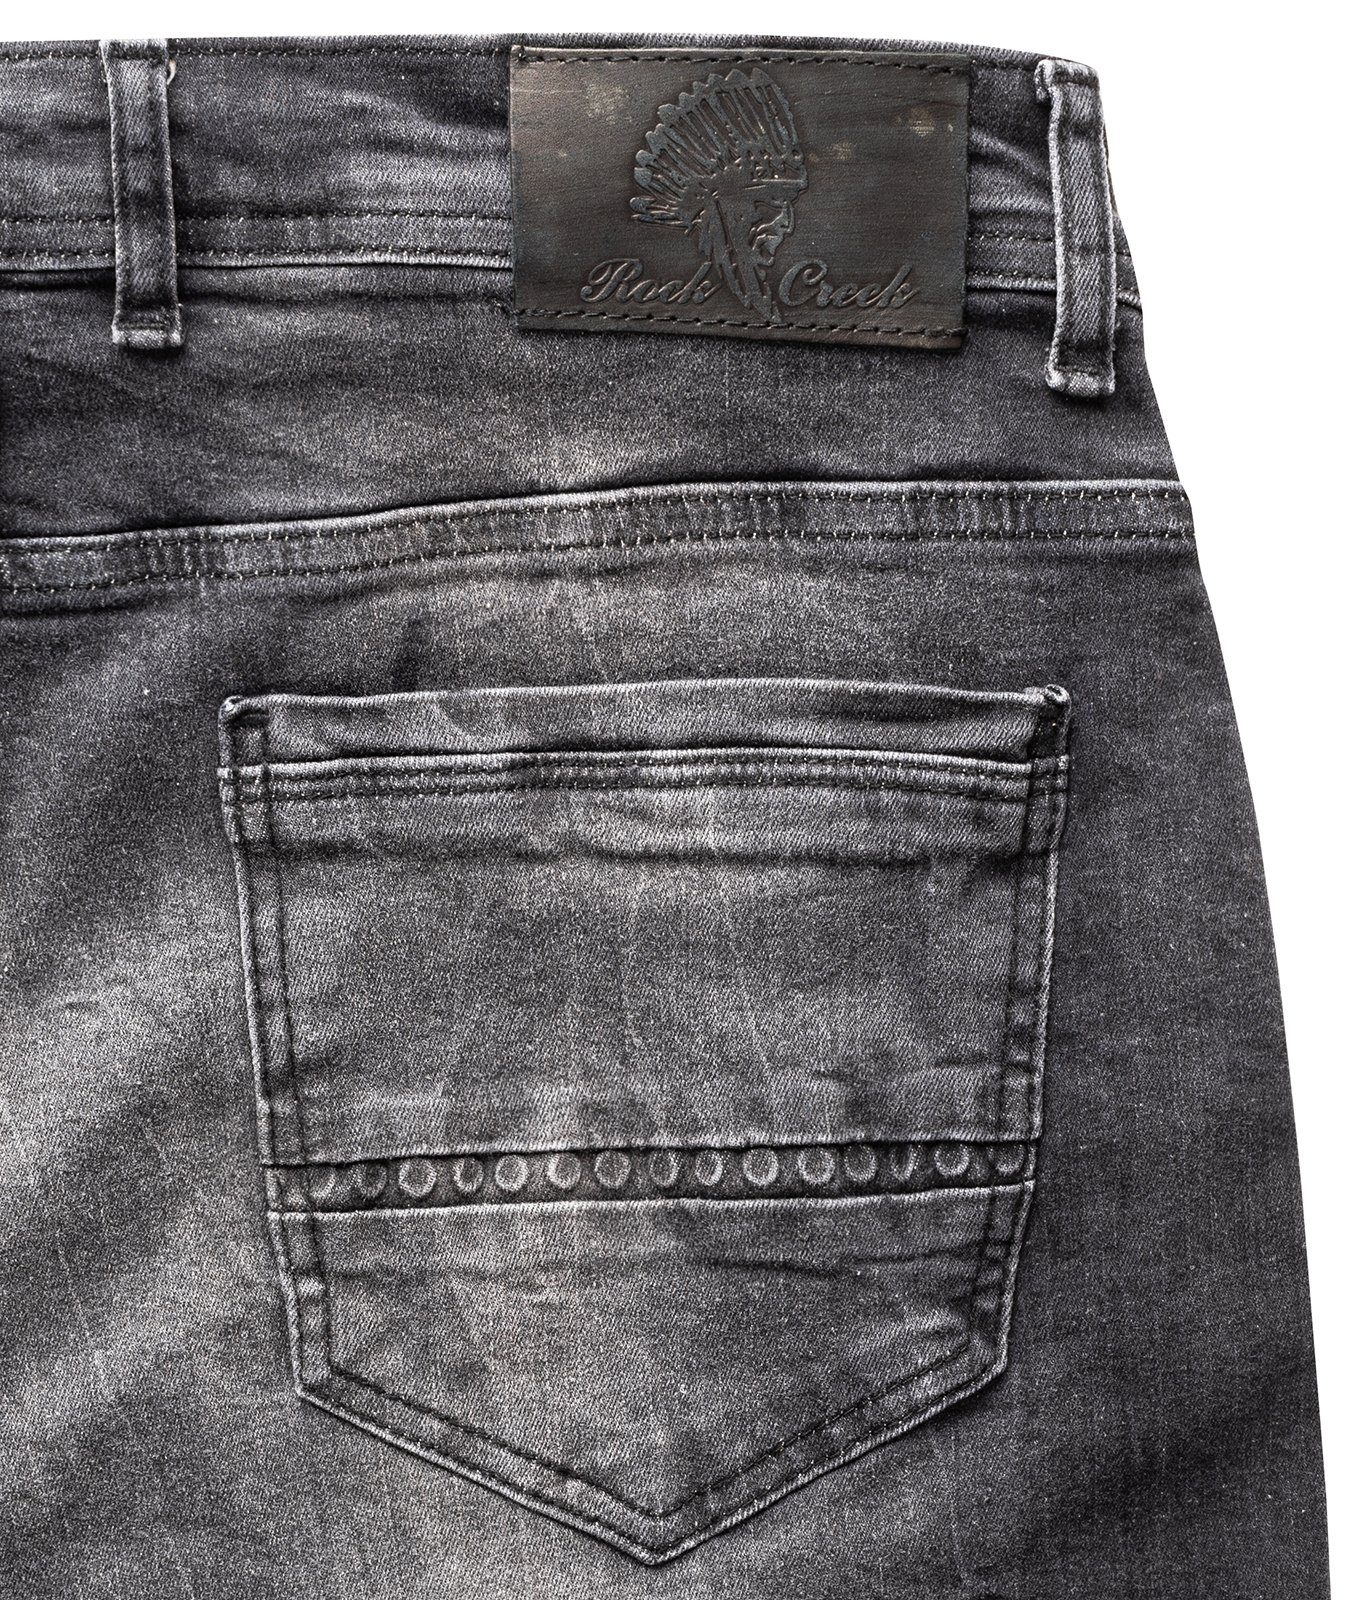 Jeans RC-2158 Rock Herren Creek Fit Straight-Jeans Regular Dunkelgrau